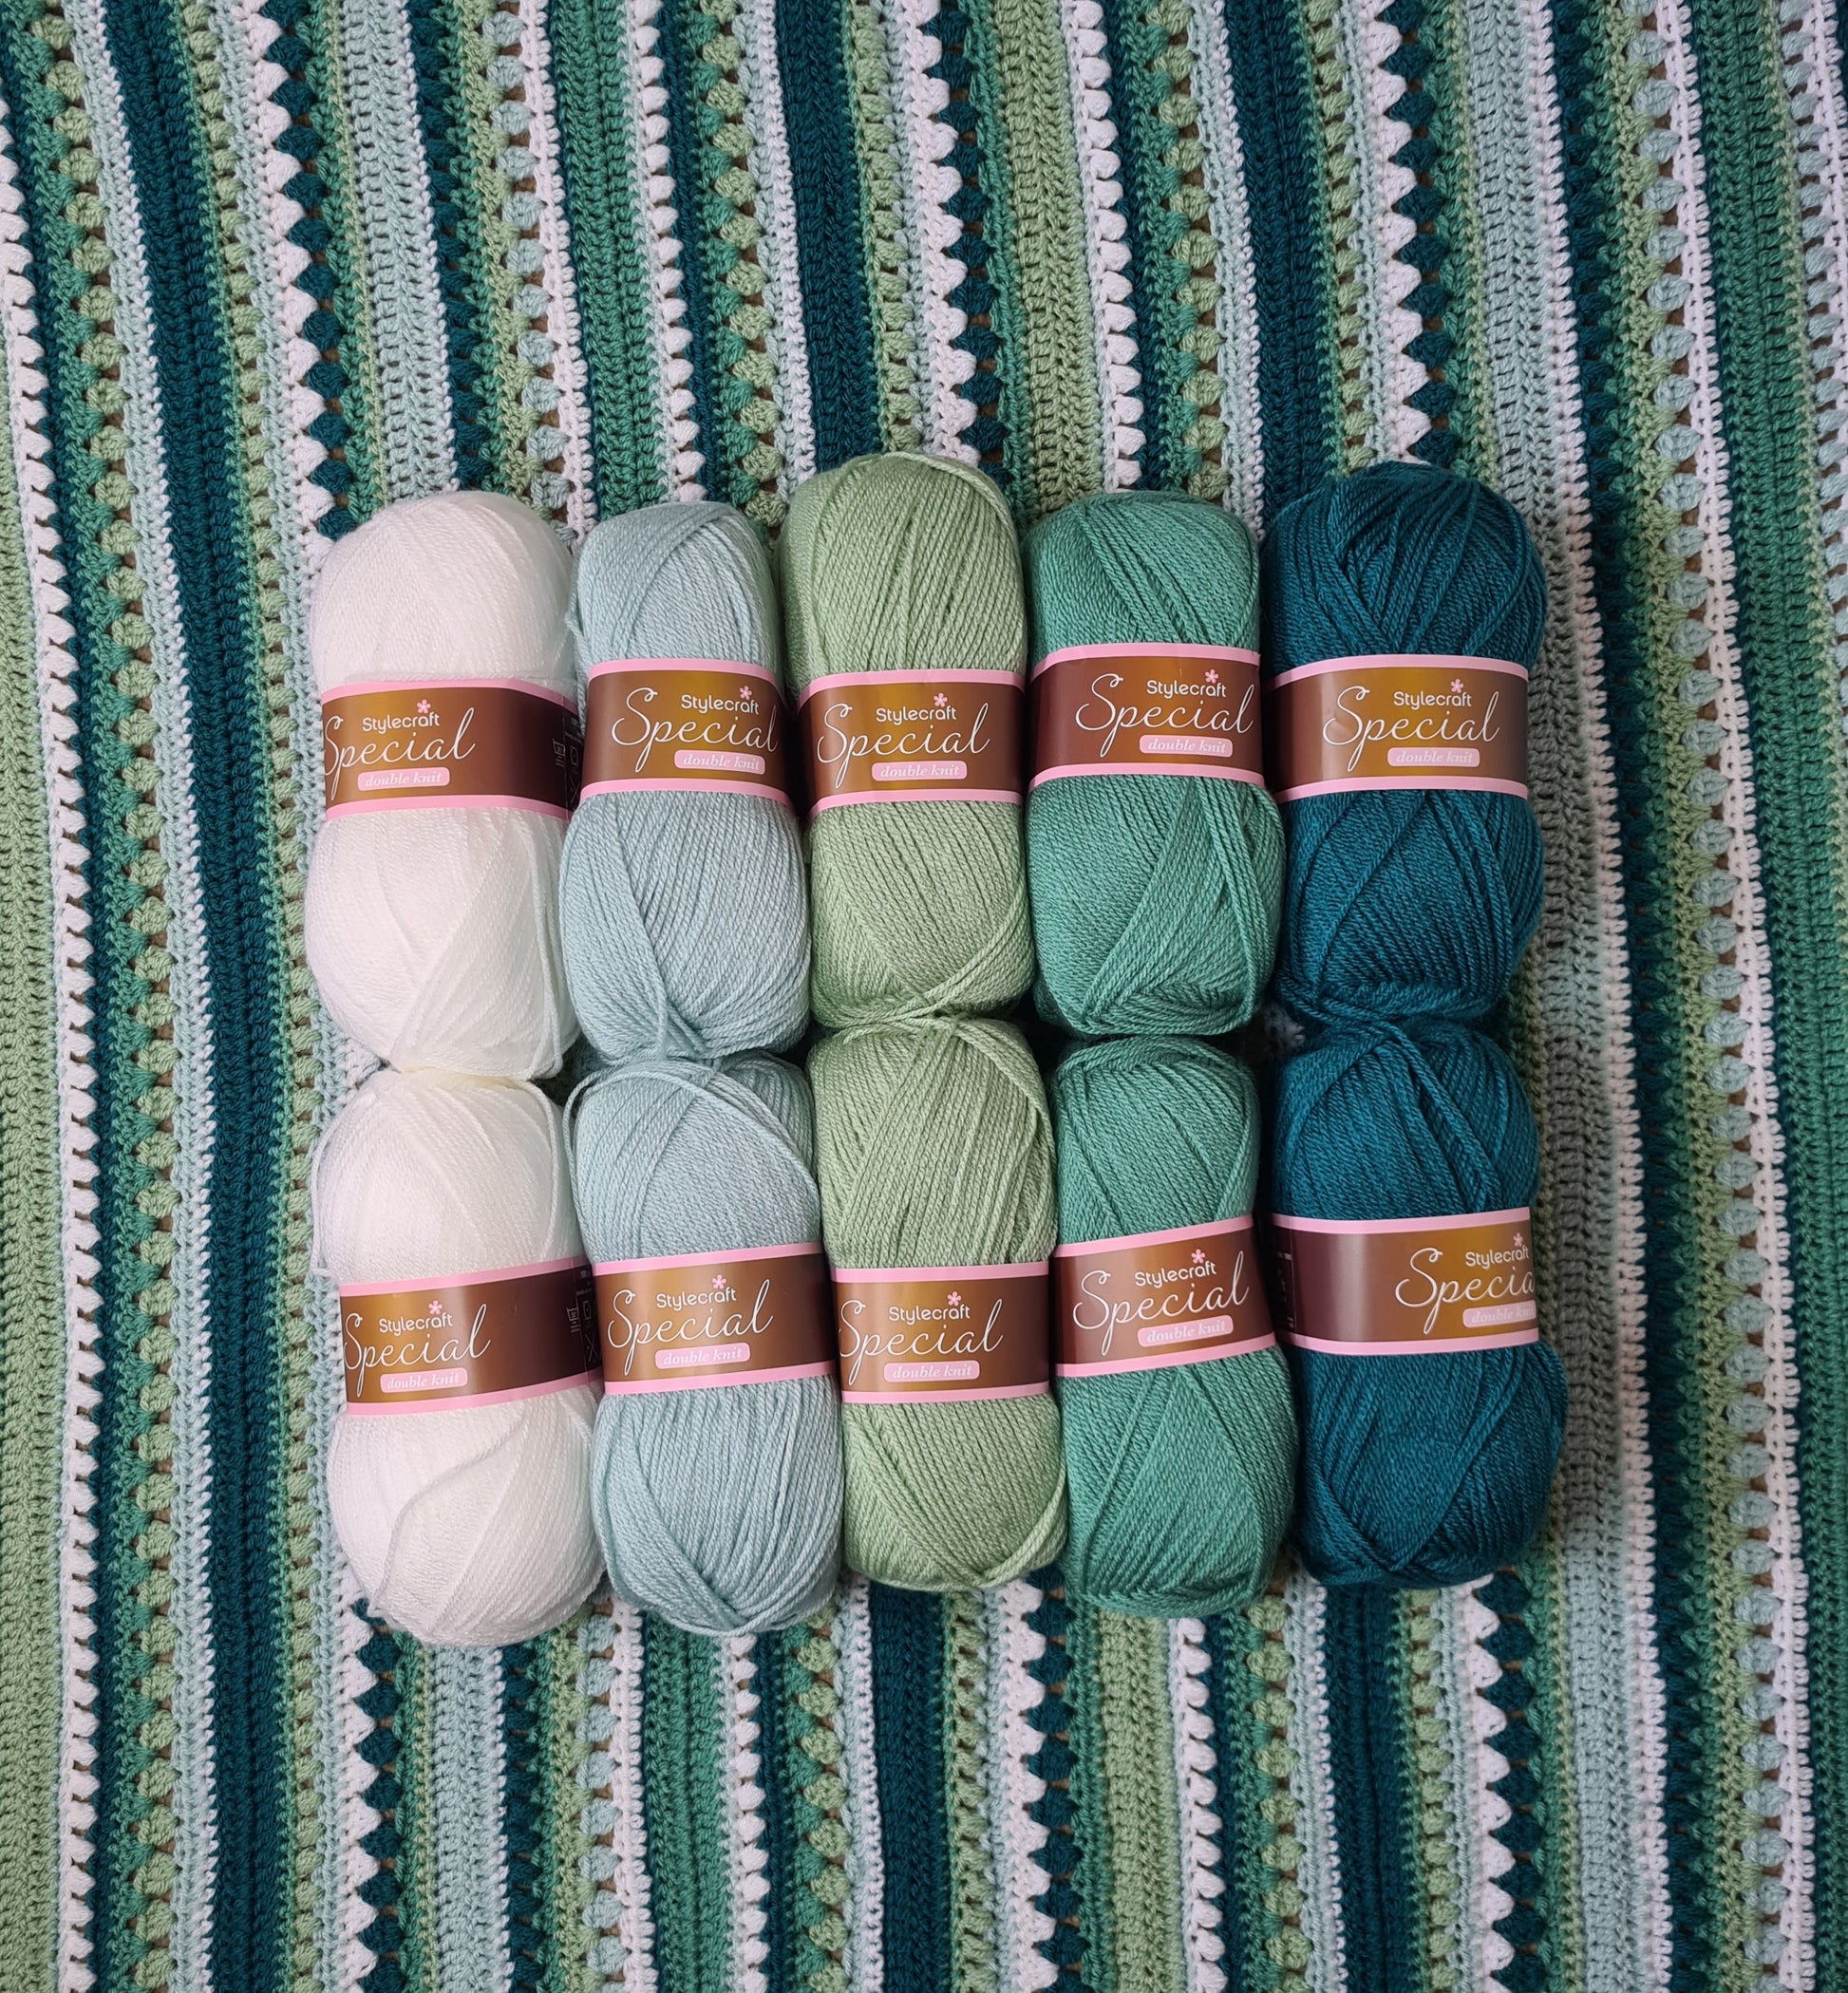 shades of green stylecraft special dk crochet kit